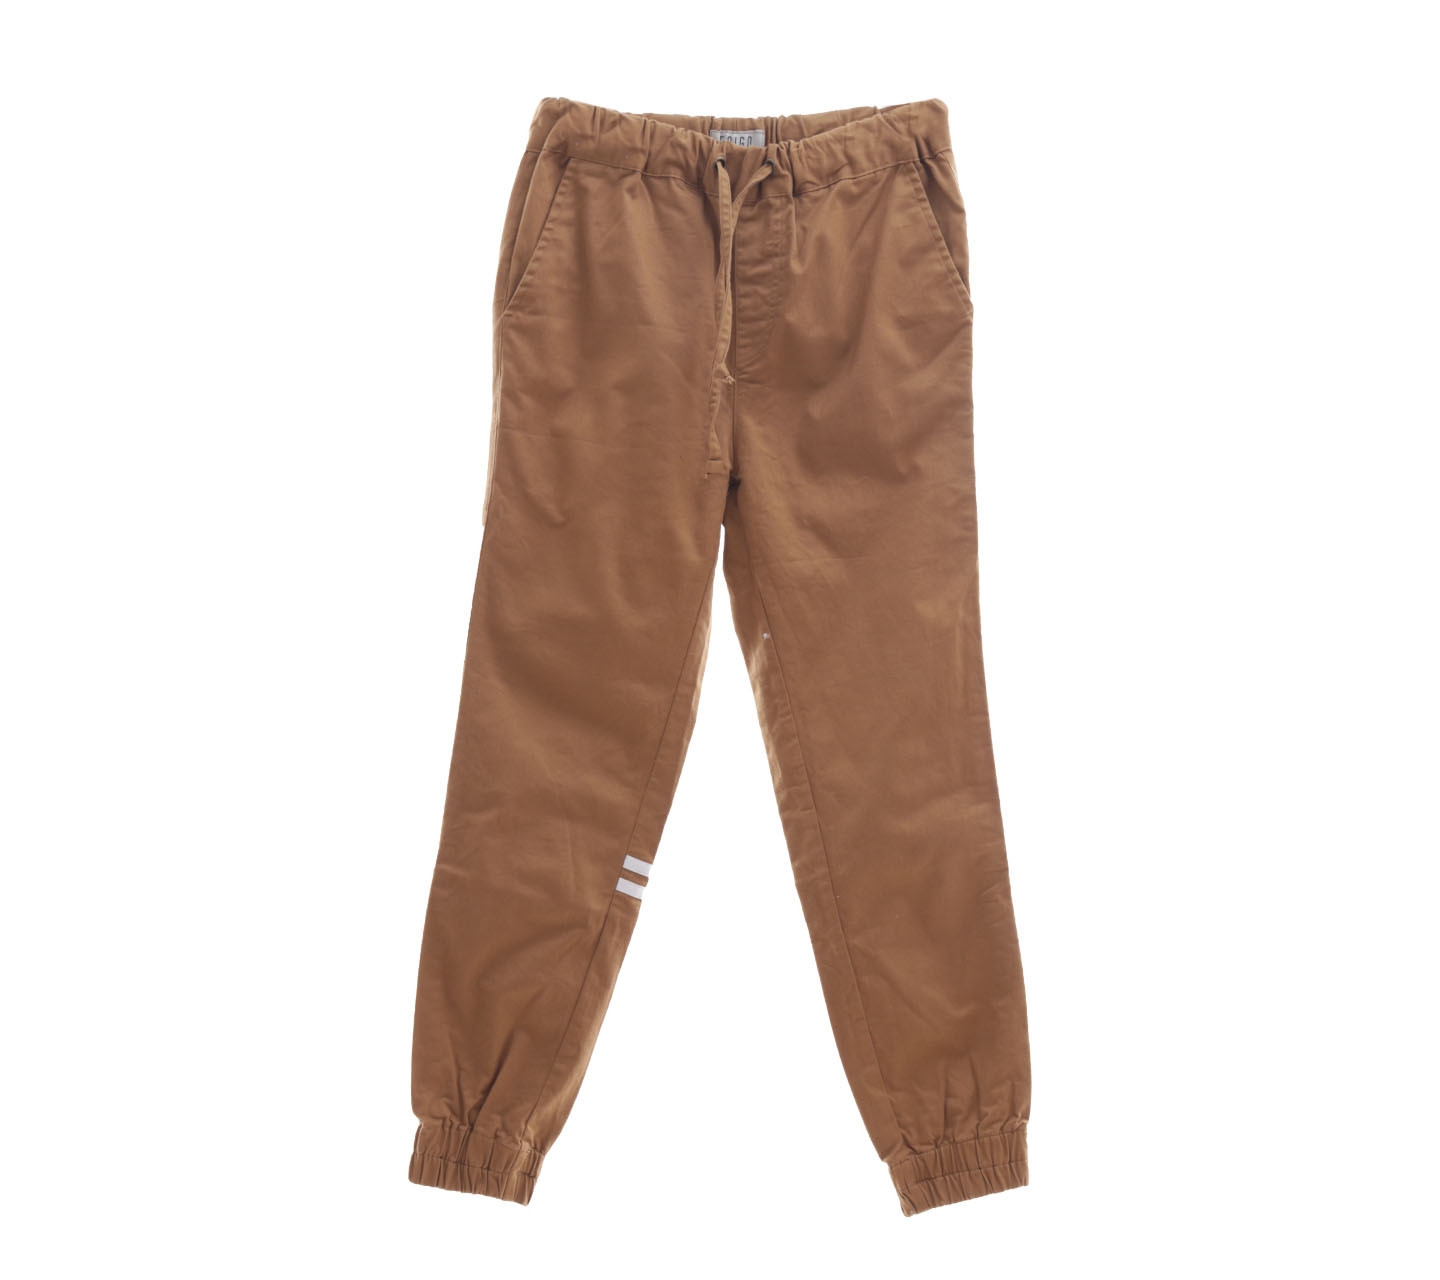 Erigo Brown Sweet Pants Trousers